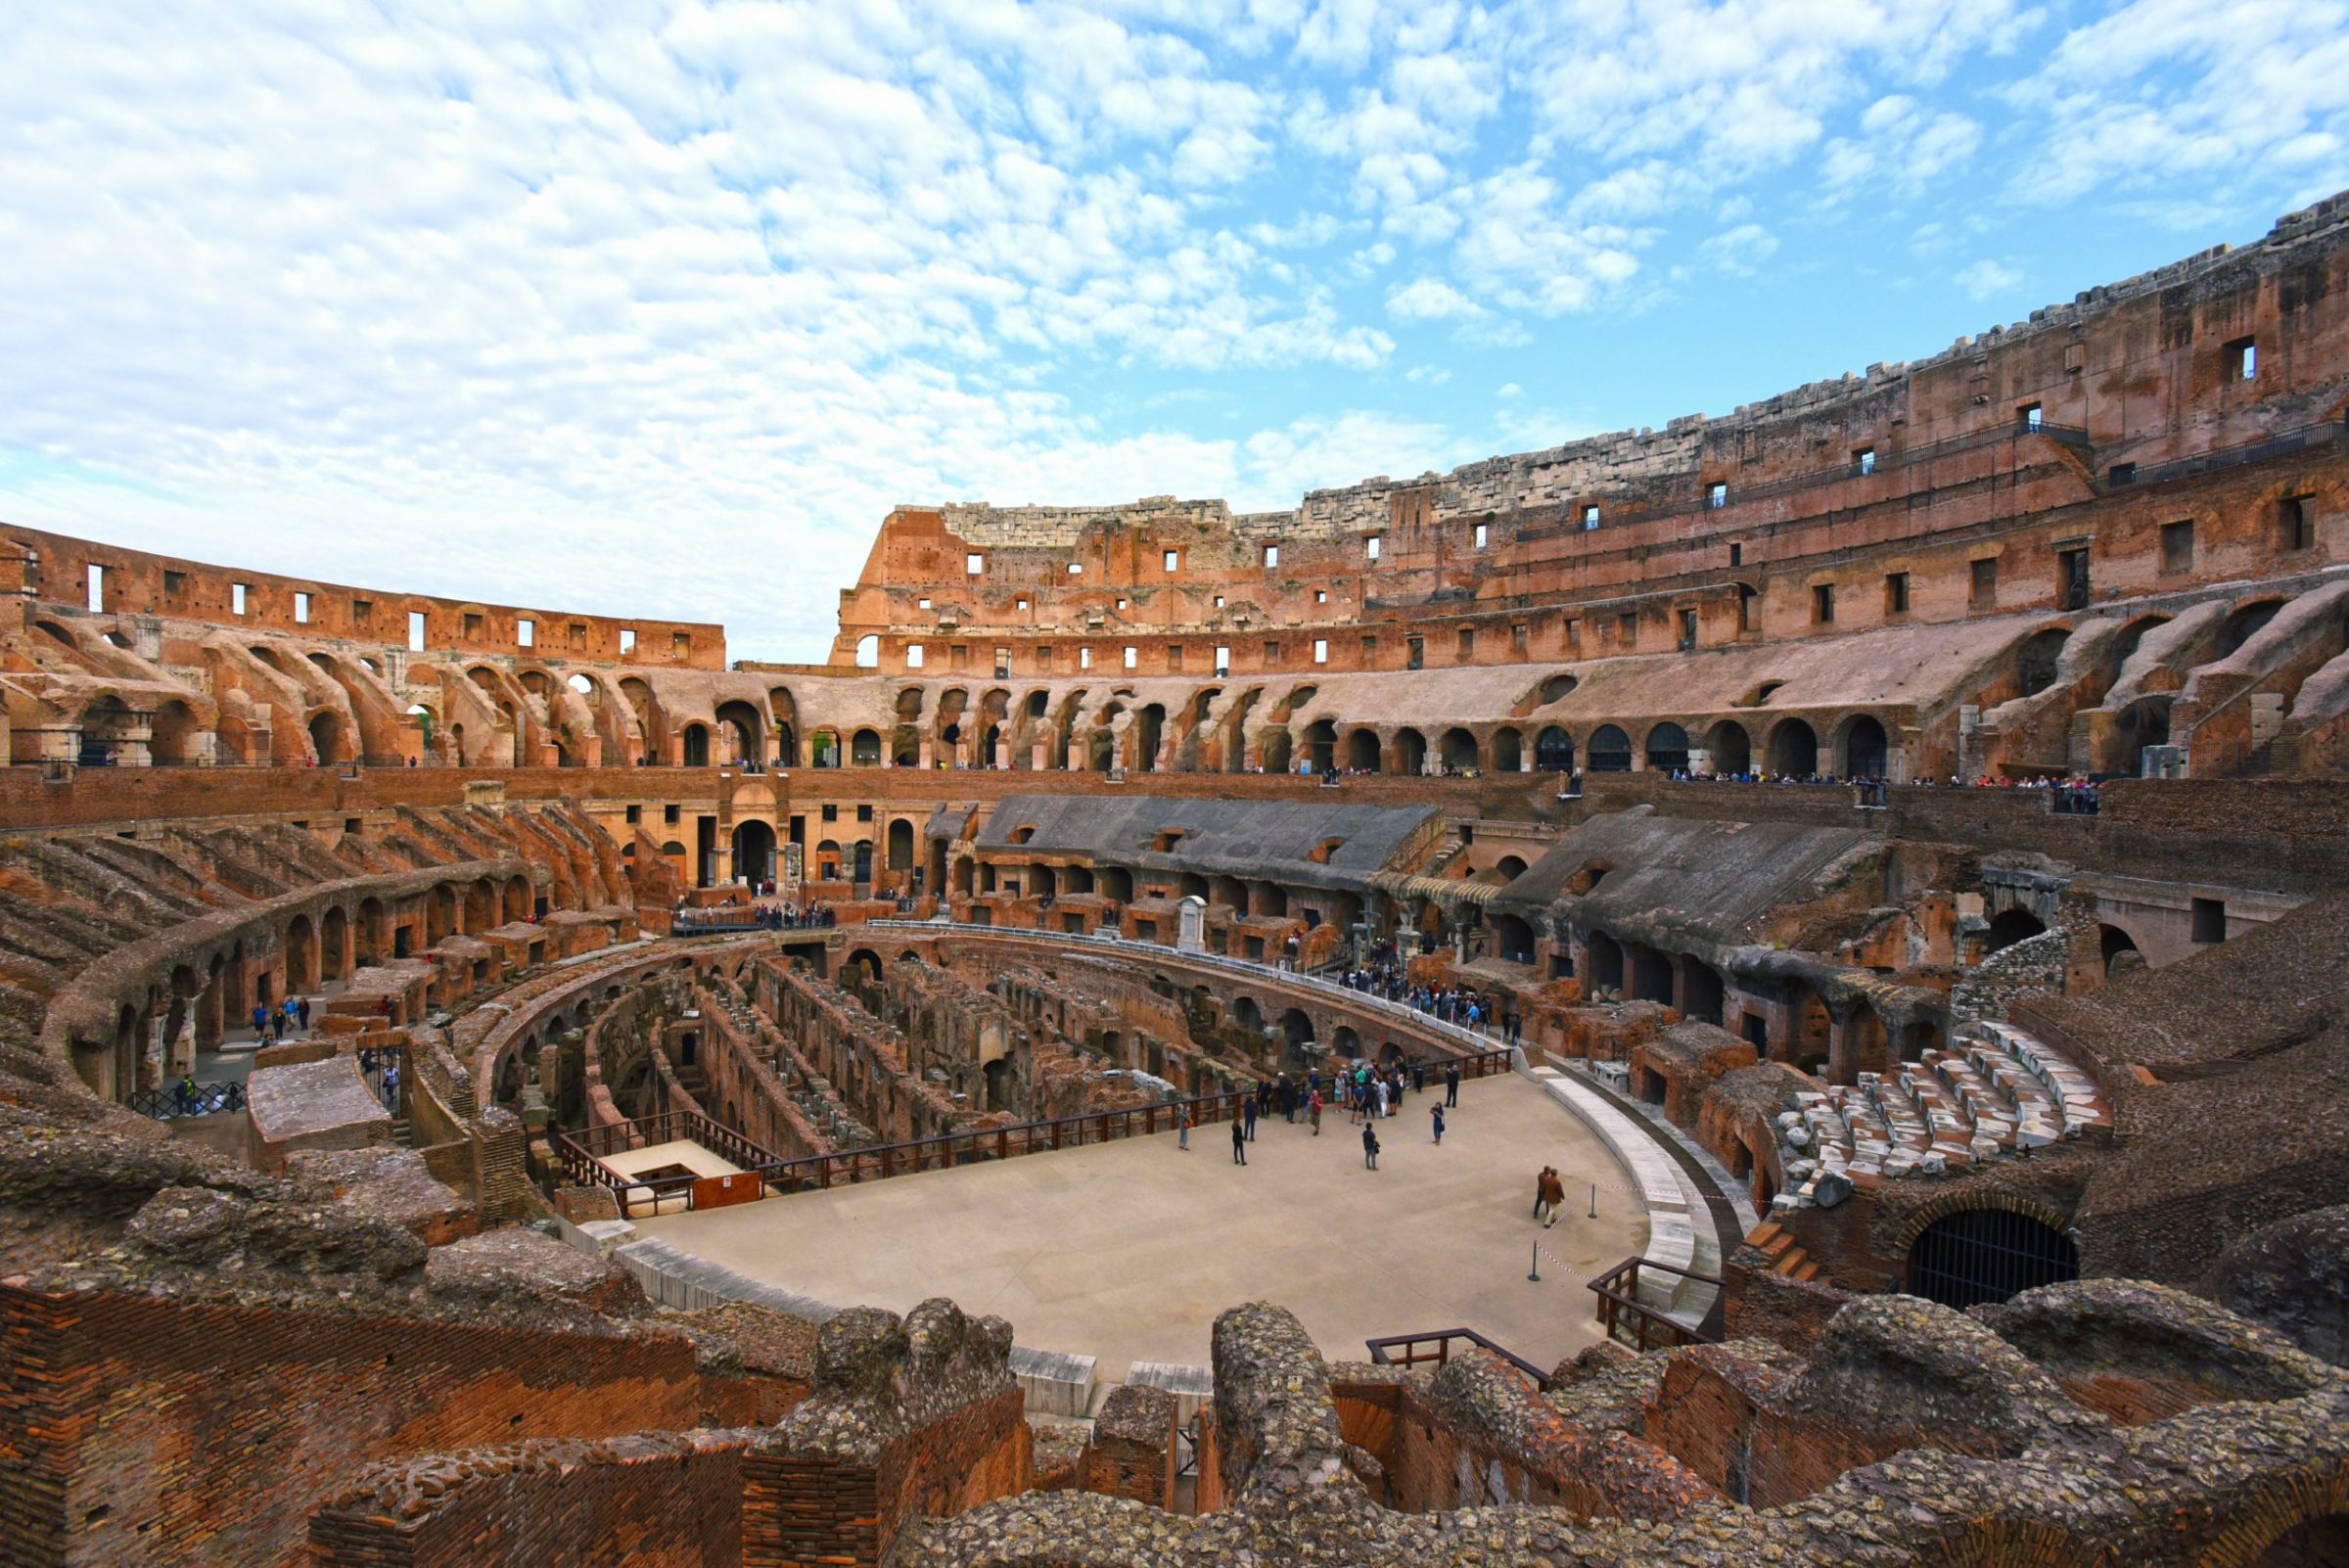 Visite Colosseo, Visite du Colisee Visit of the Colosseum foto di Tommao Wang Unsplash